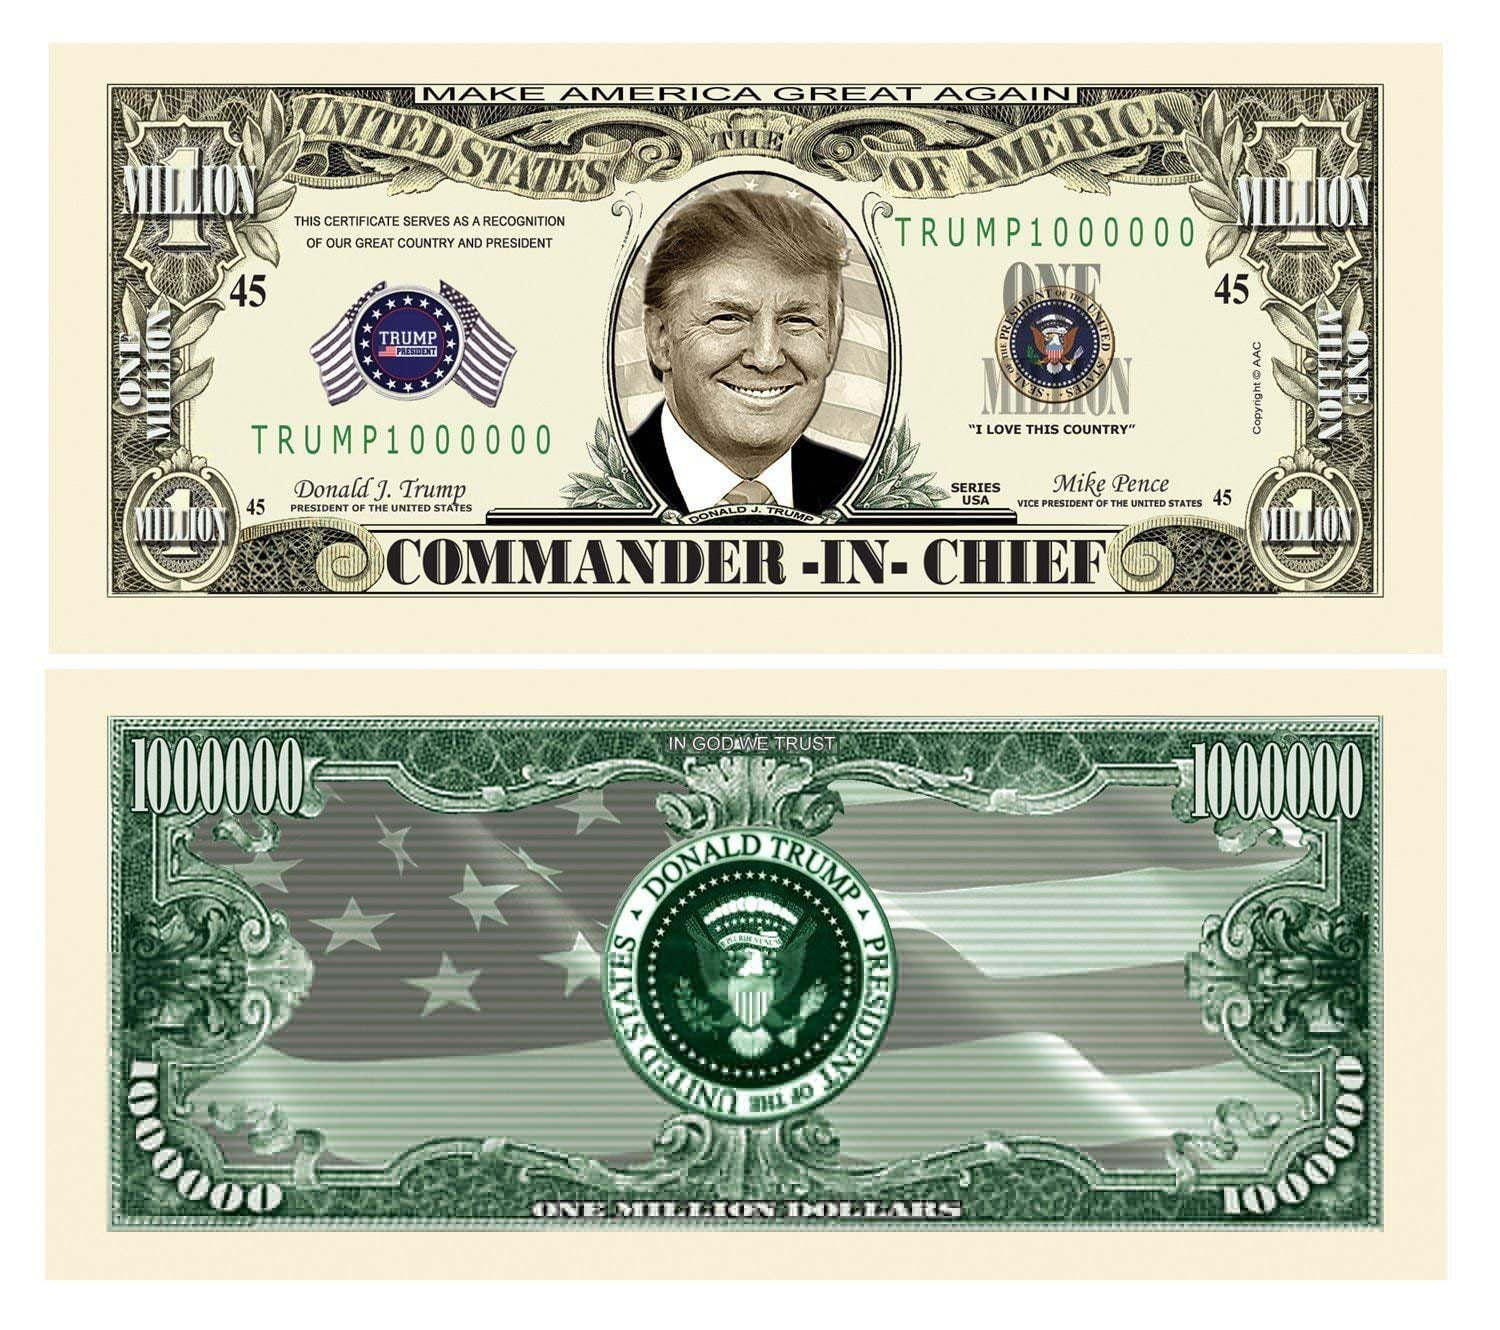 50 Donald Trump VS Hillary Clinton Indecisive Note with Bonus “Thanks a Million” 